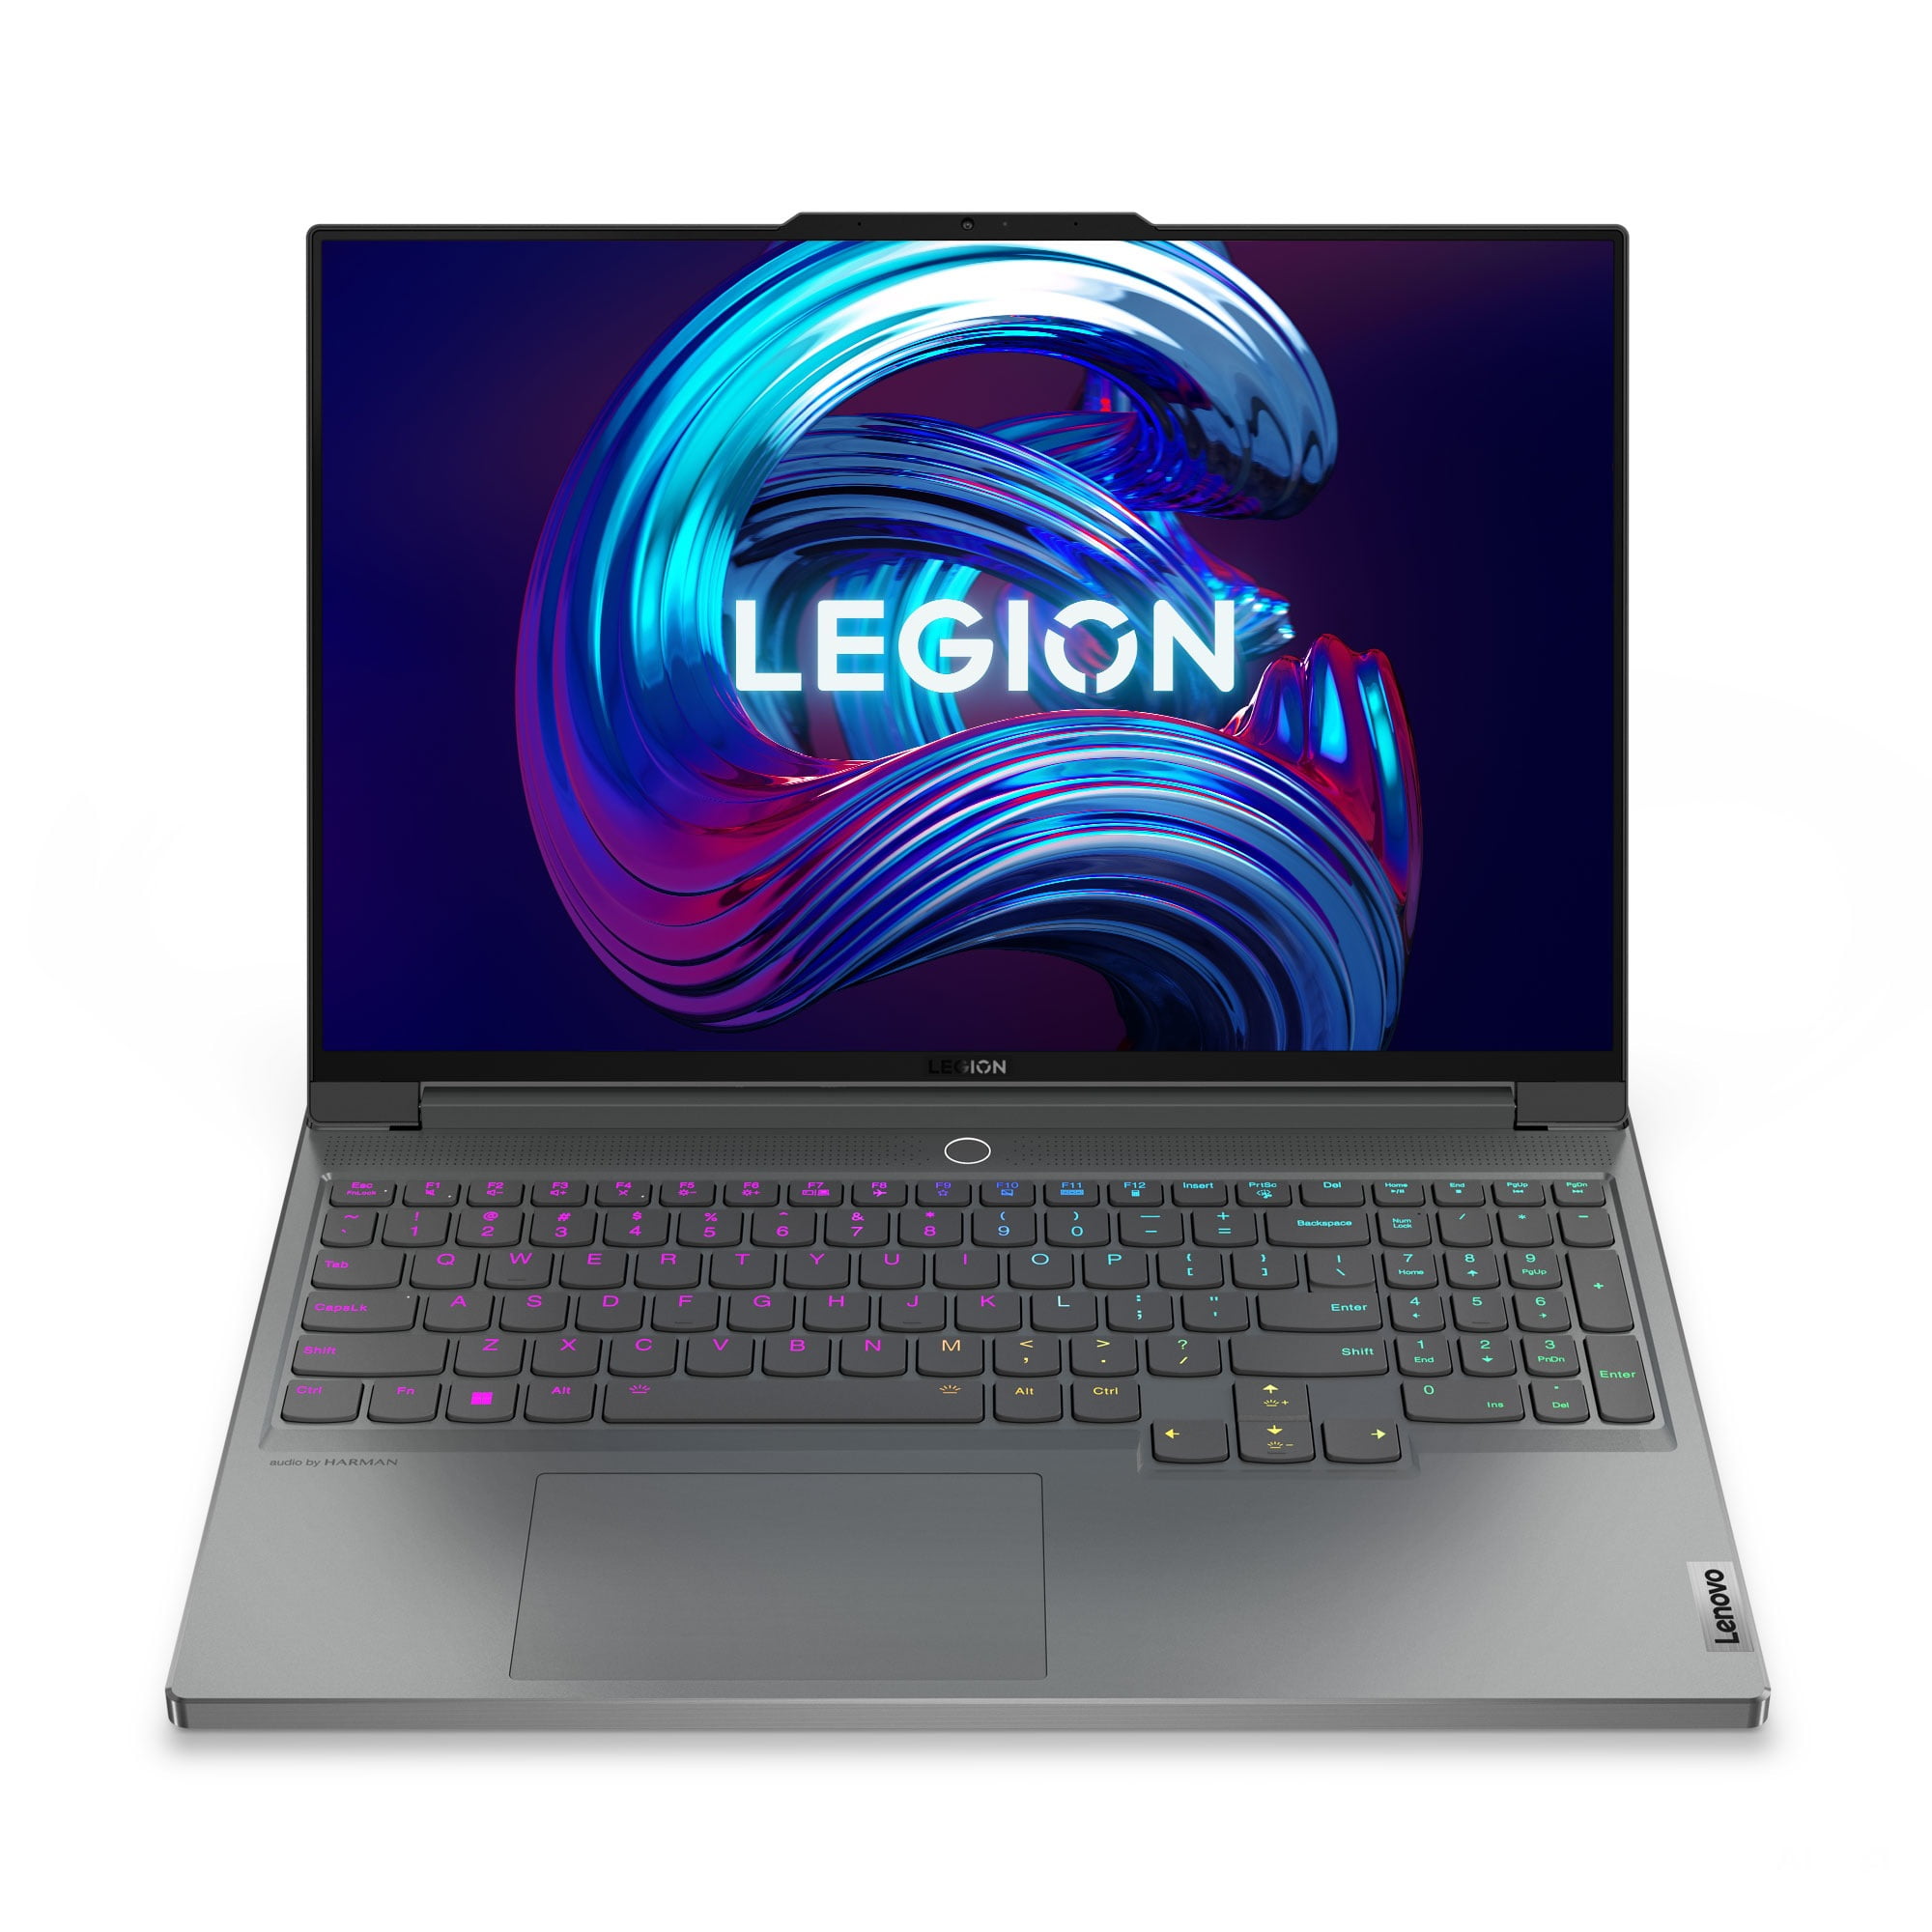 Lenovo Legion 7 Gen 7 (2022) Review (Ryzen 7 6800H, Radeon RX 6700M)